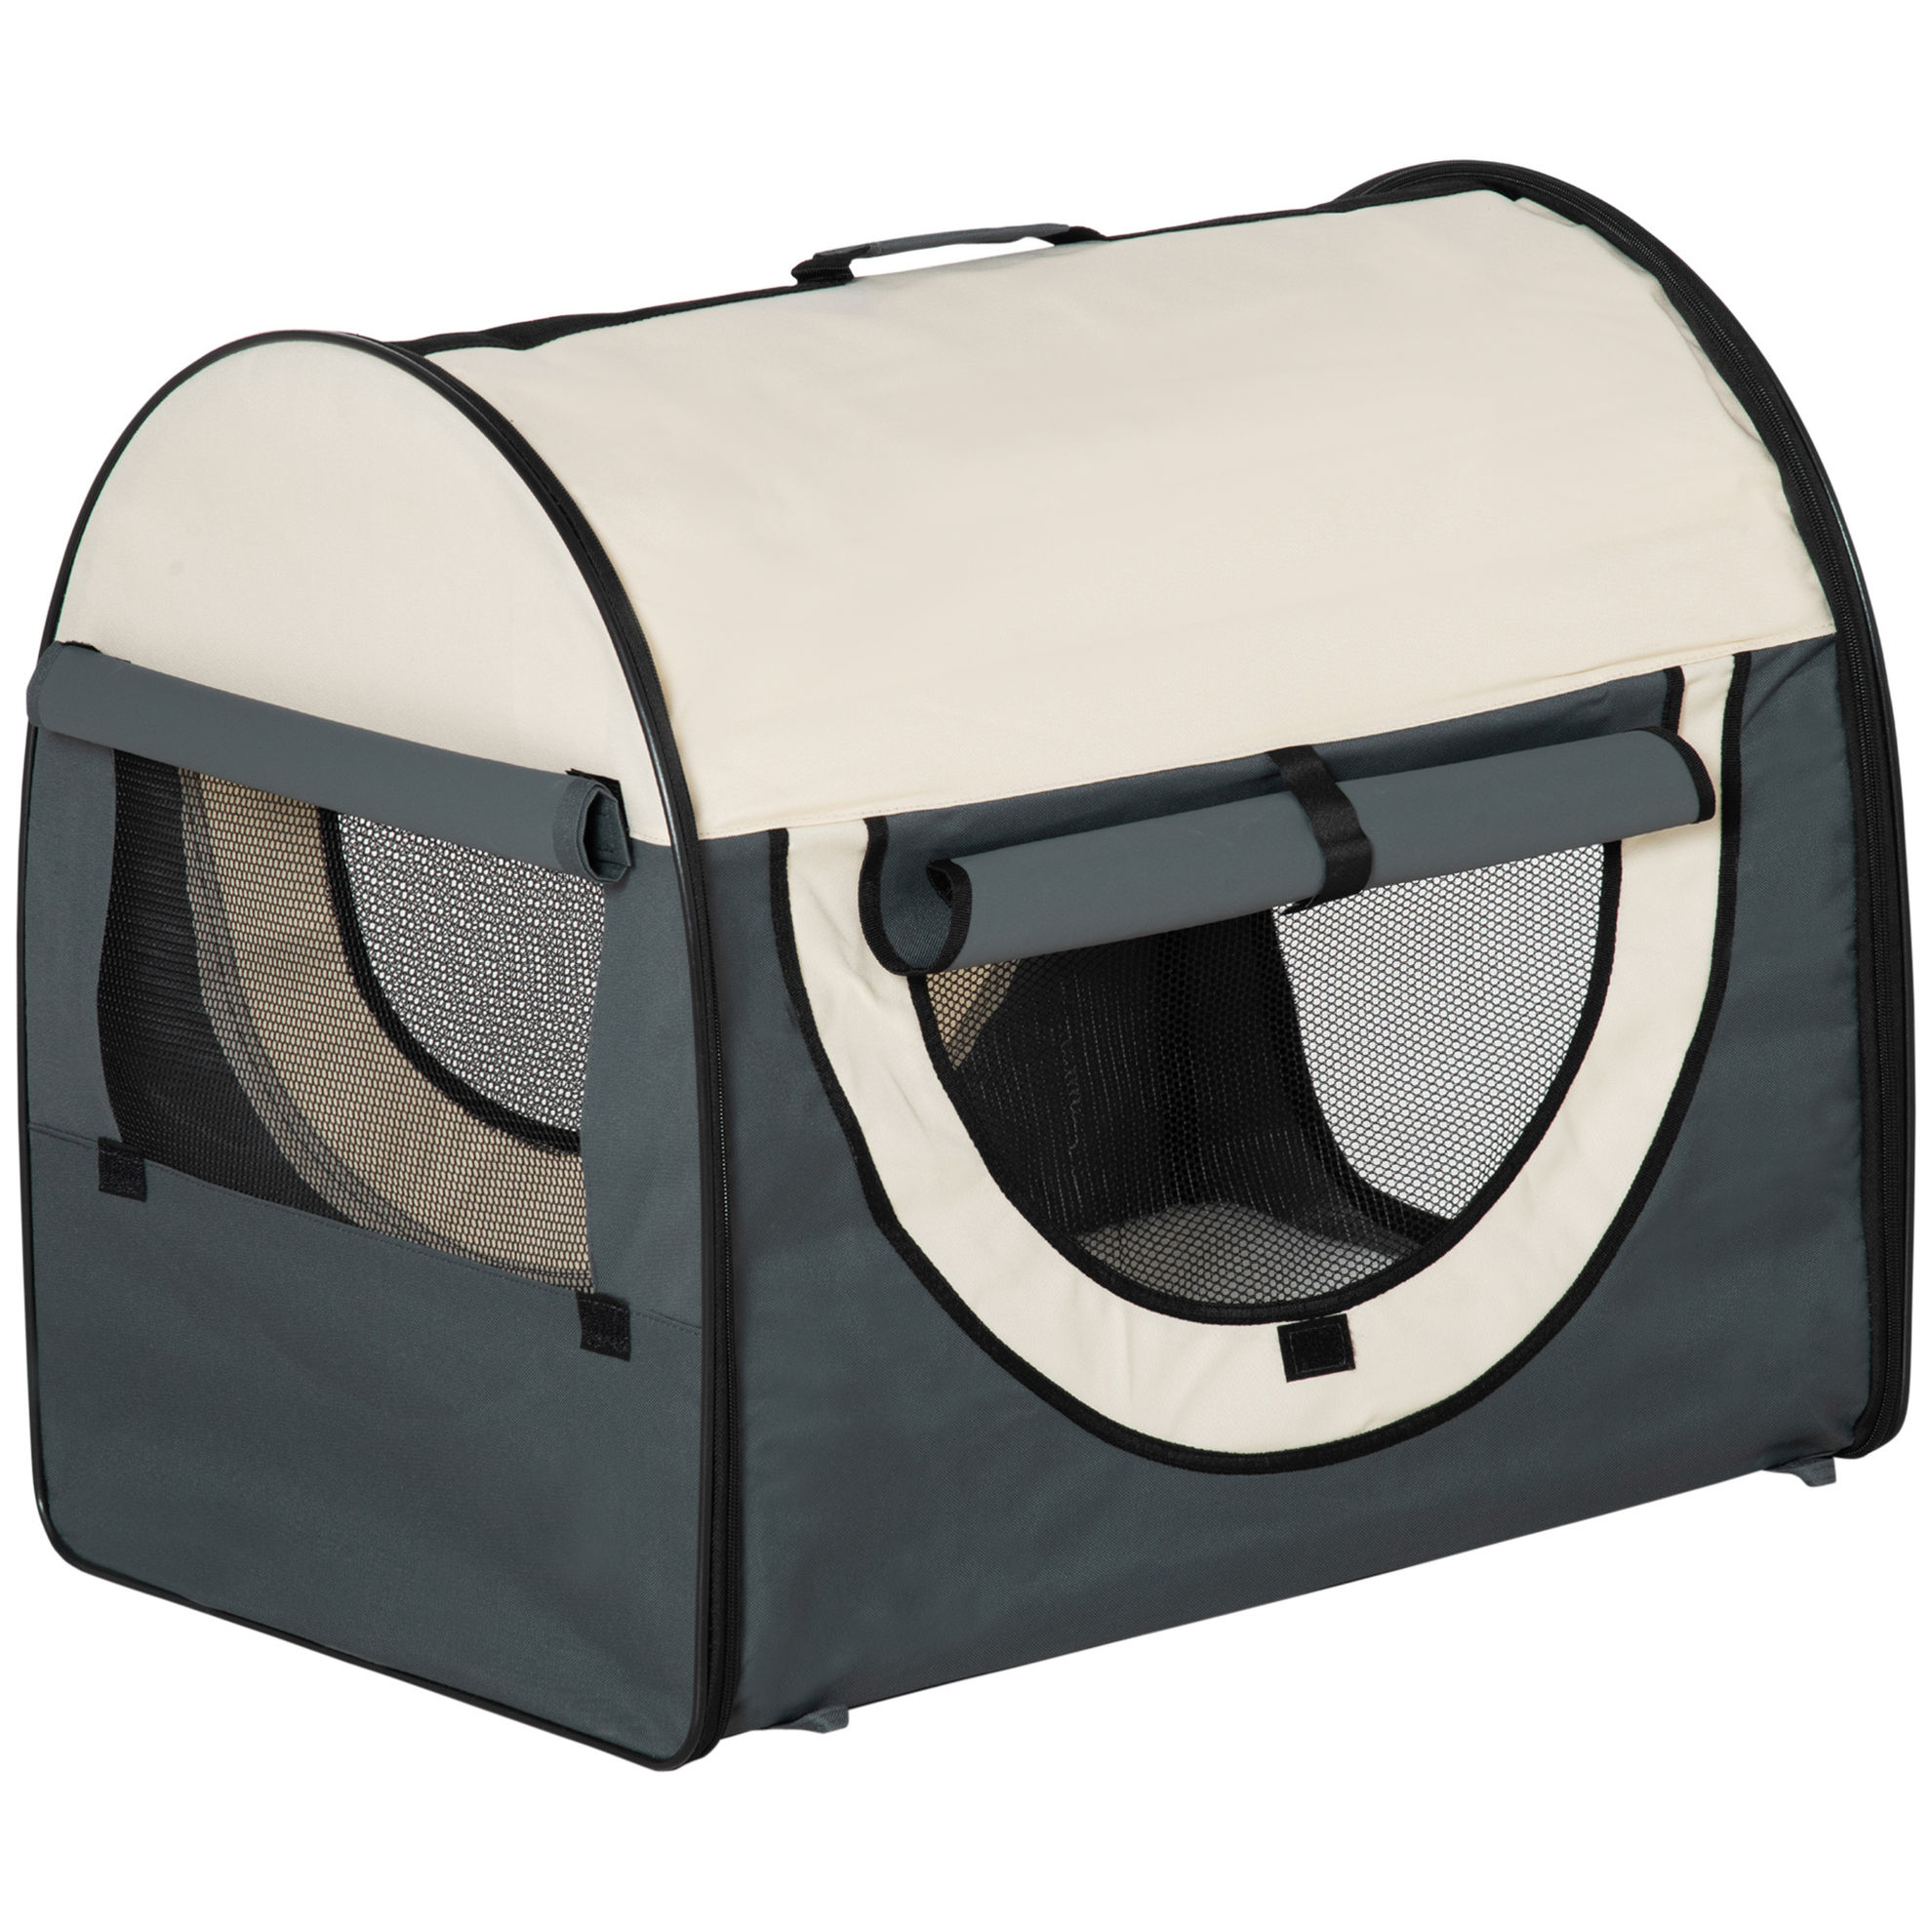 Hundetransportbox in Größe L Farbe: dunkelgrau, creme | Weltbild.de